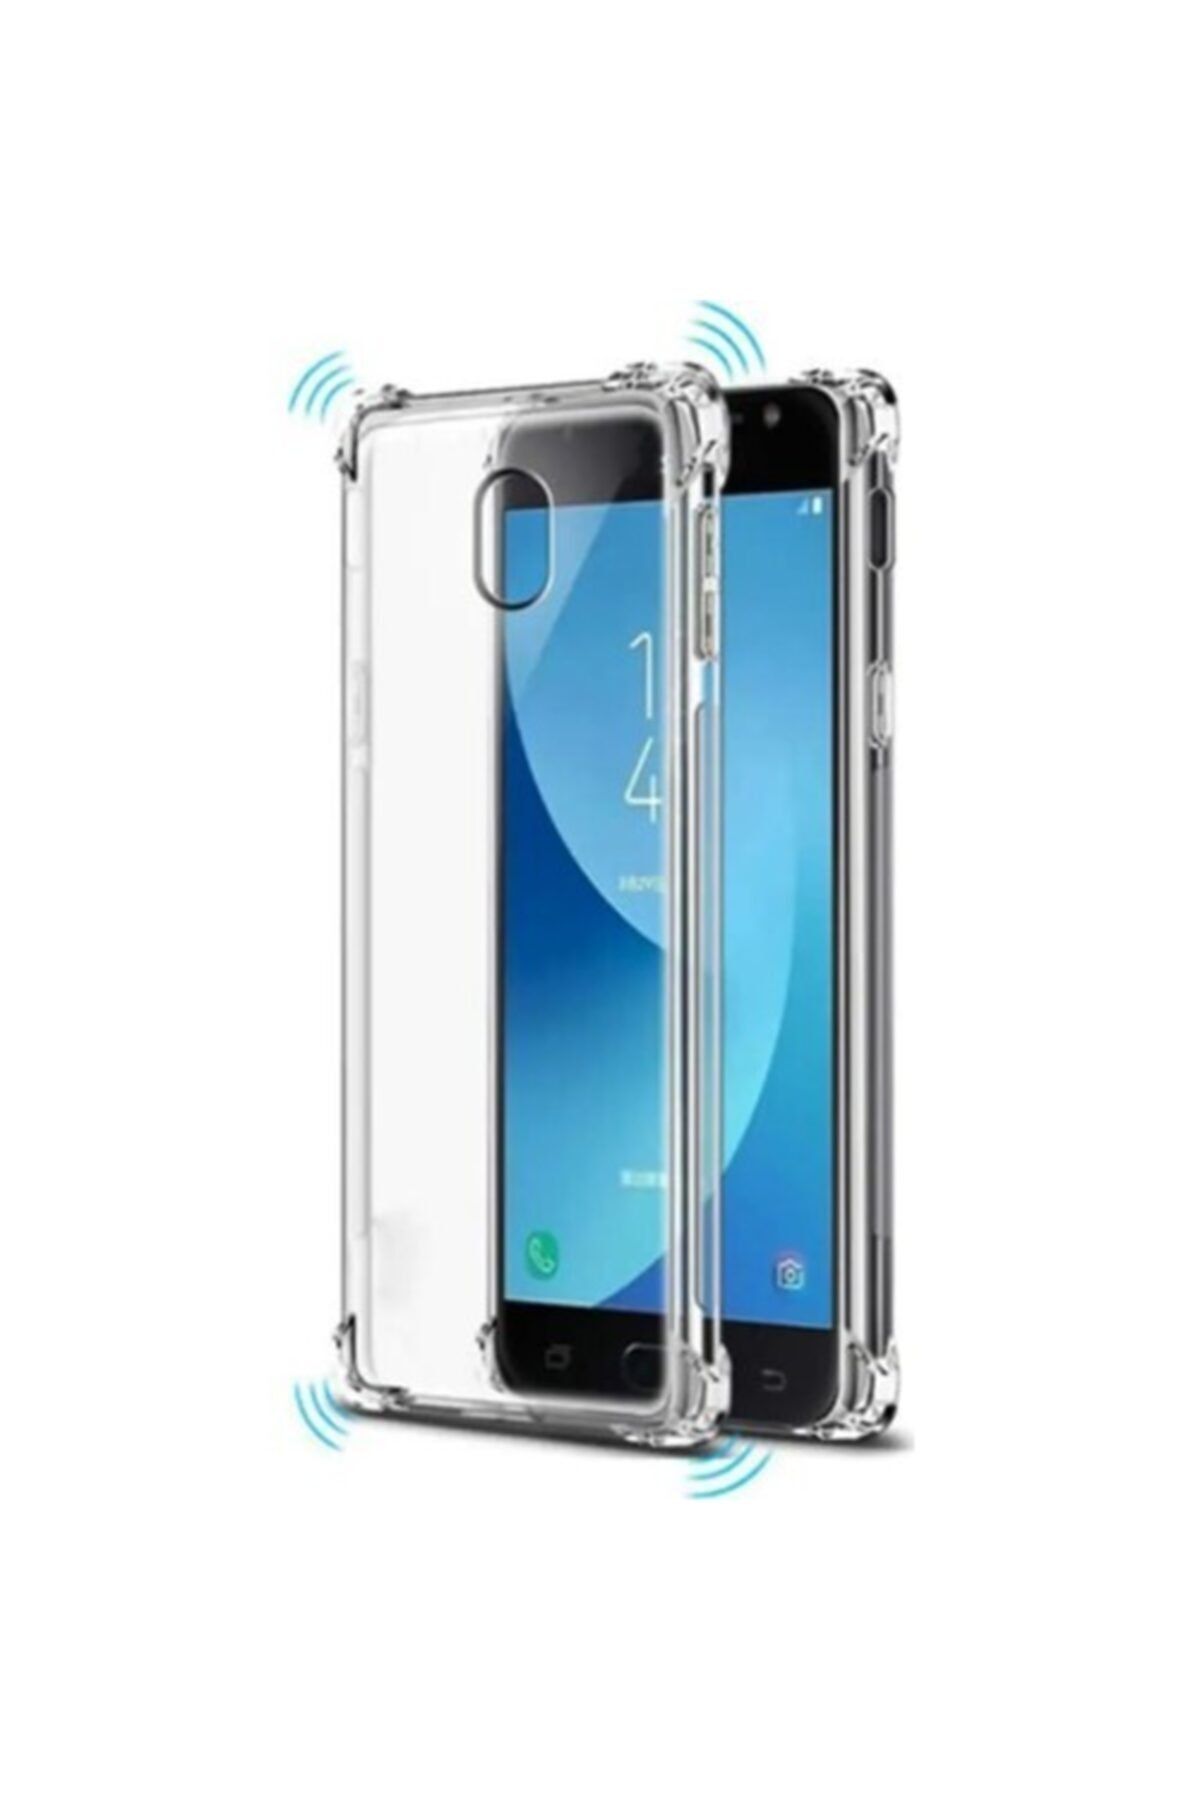 Fibaks Samsung Galaxy J7 Pro J730 Kılıf Crystal Sert Pc Antishock Darbe Emici Kenar Şeffaf Silikon Kapak